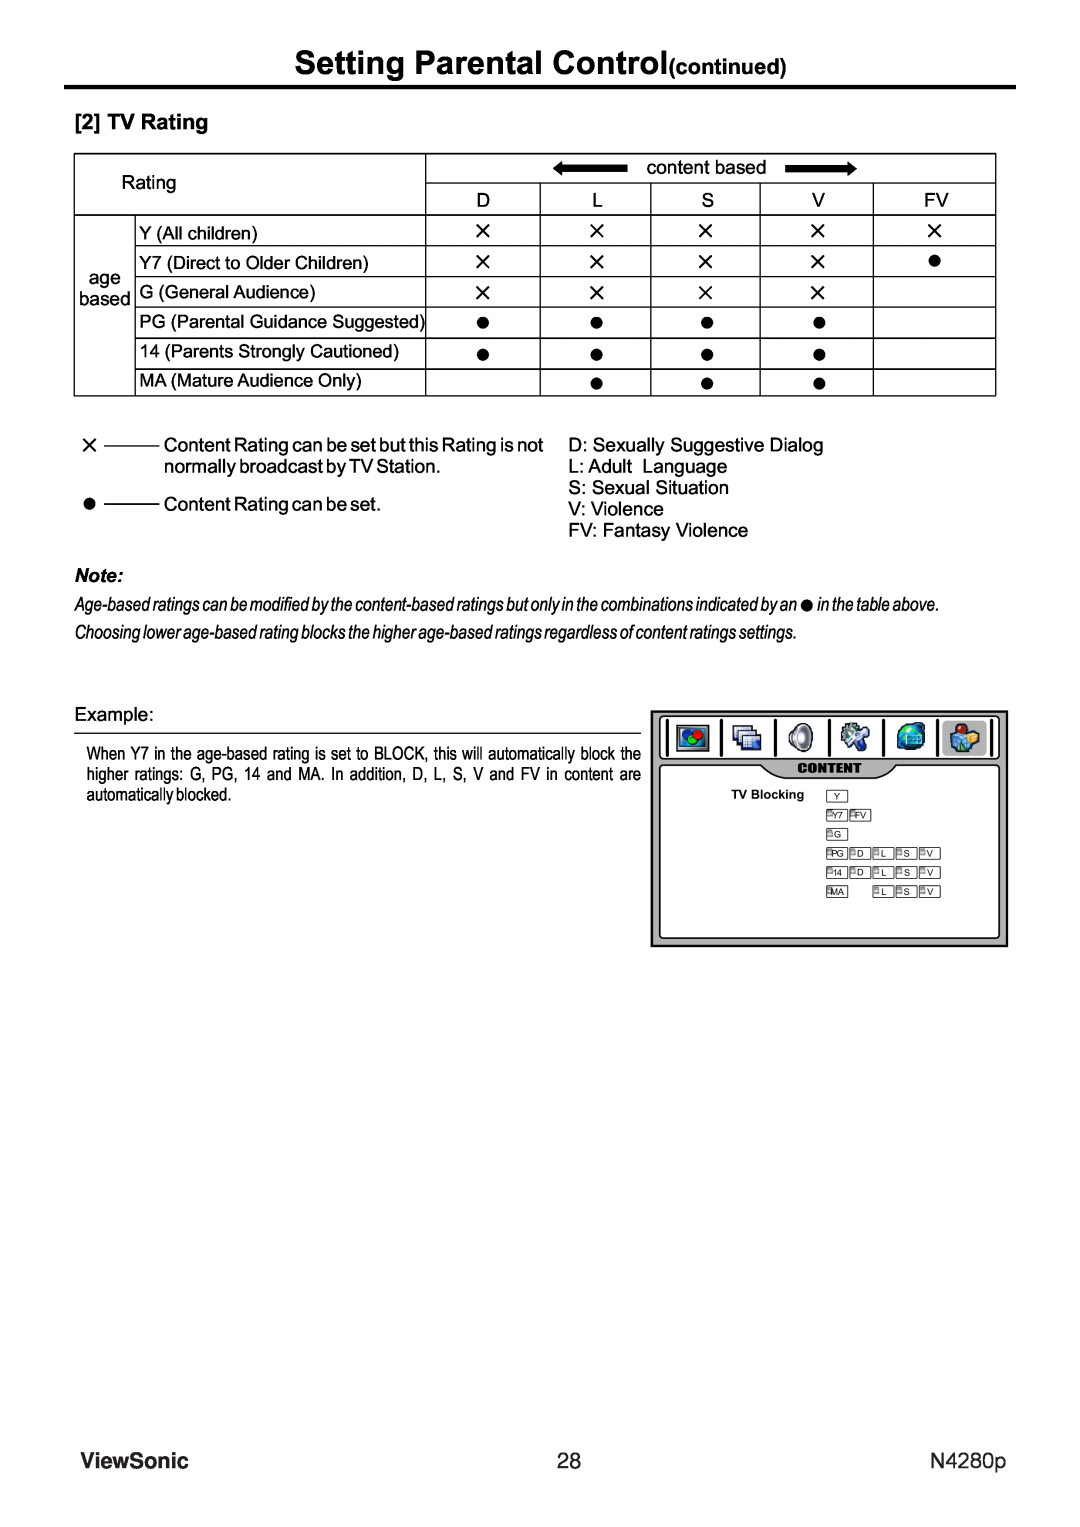 ViewSonic N4280p manual Setting Parental Controlcontinued, TV Rating, ViewSonic 